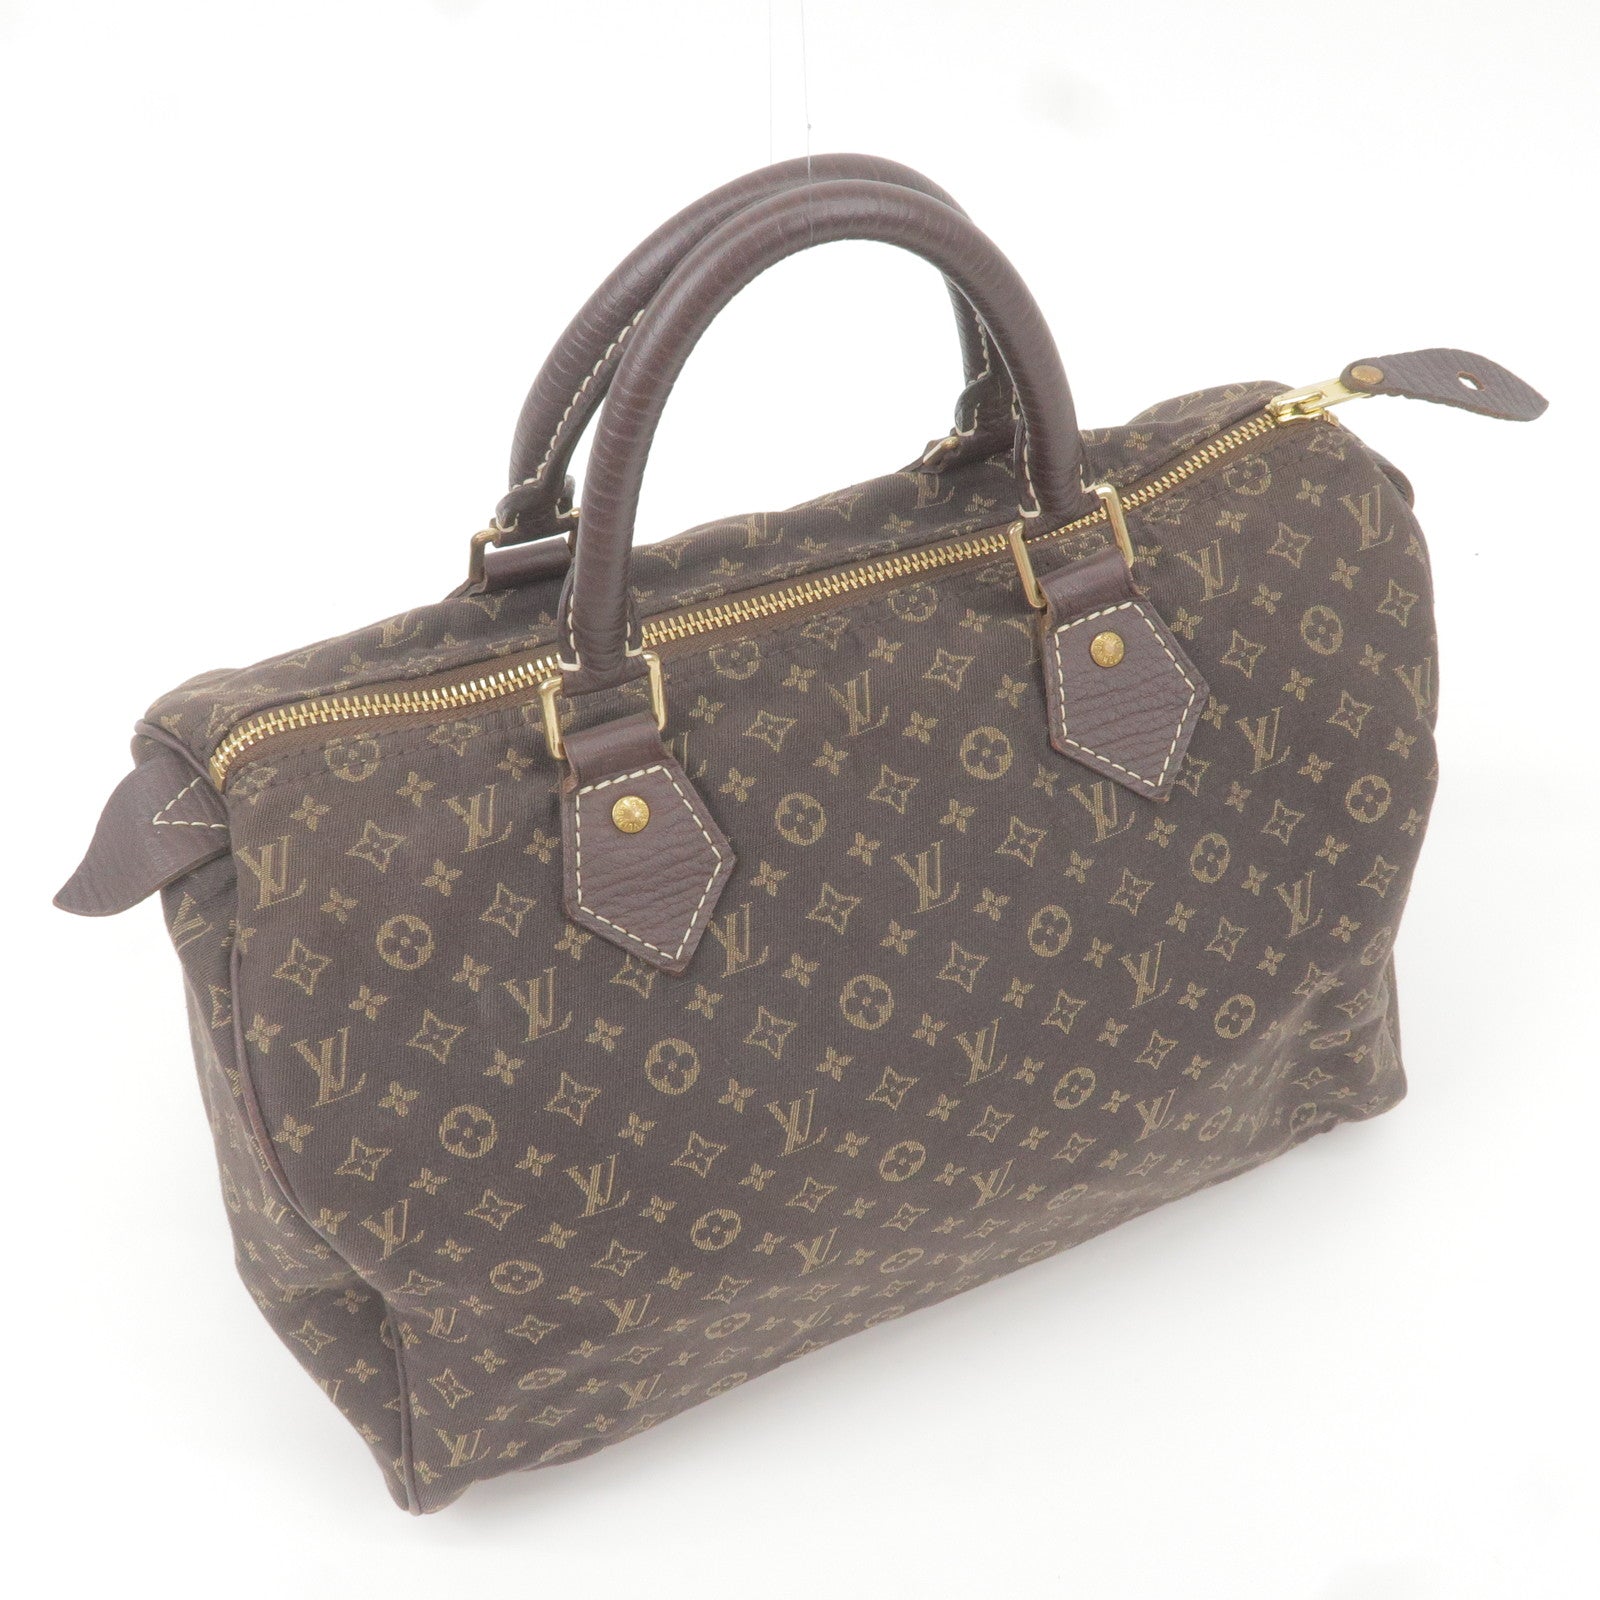 Louis Vuitton Speedy 30 Handbag in Ebene Monogram Canvas And Brown